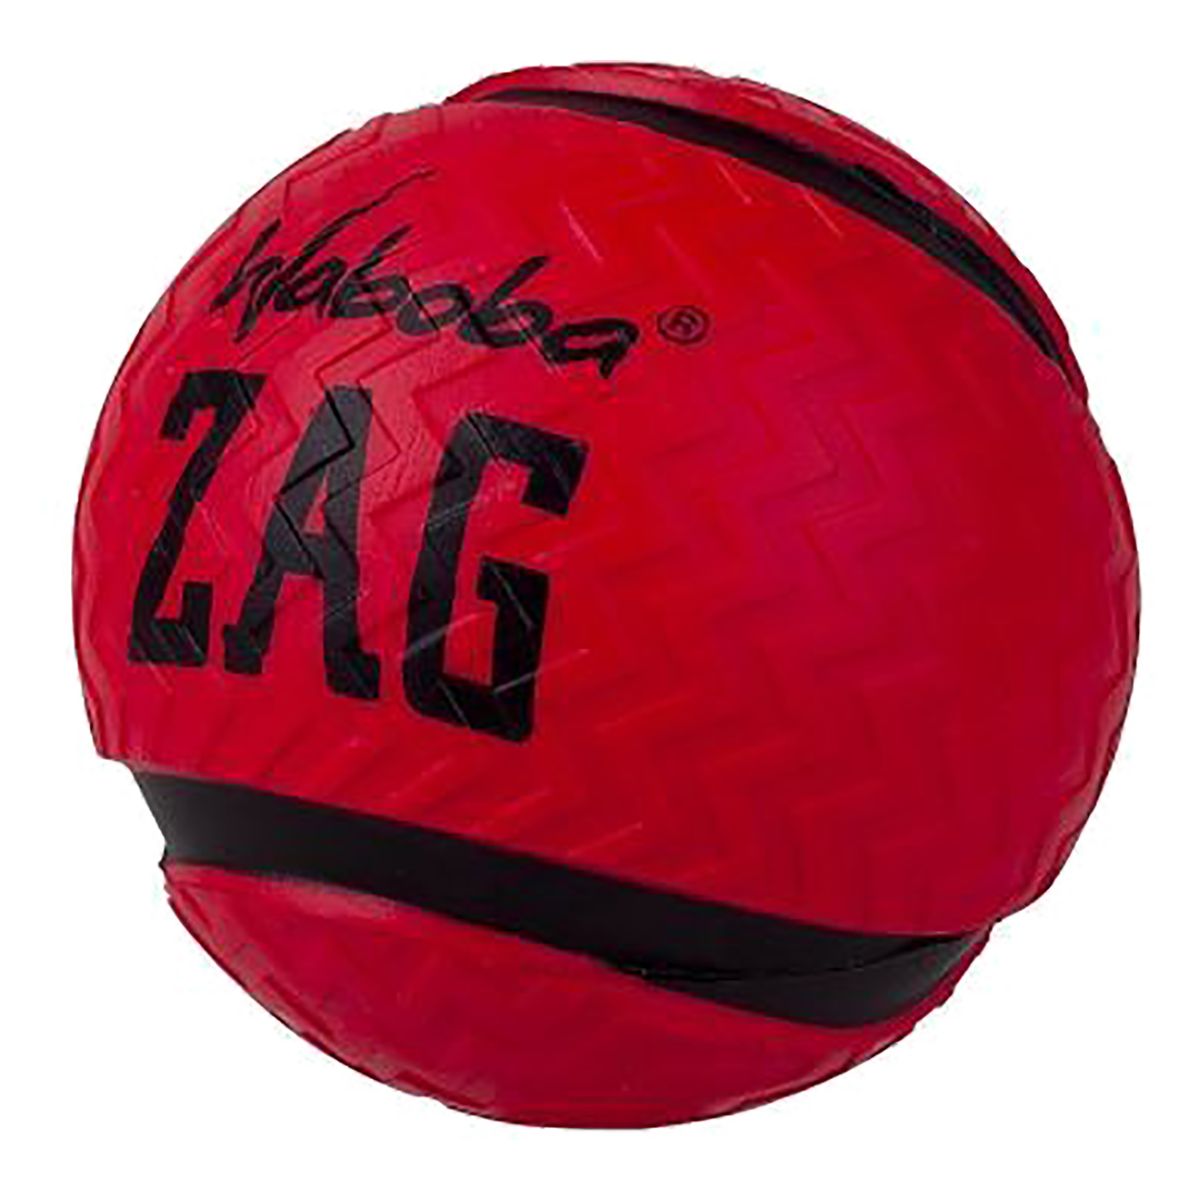 Waboba Zag Ball